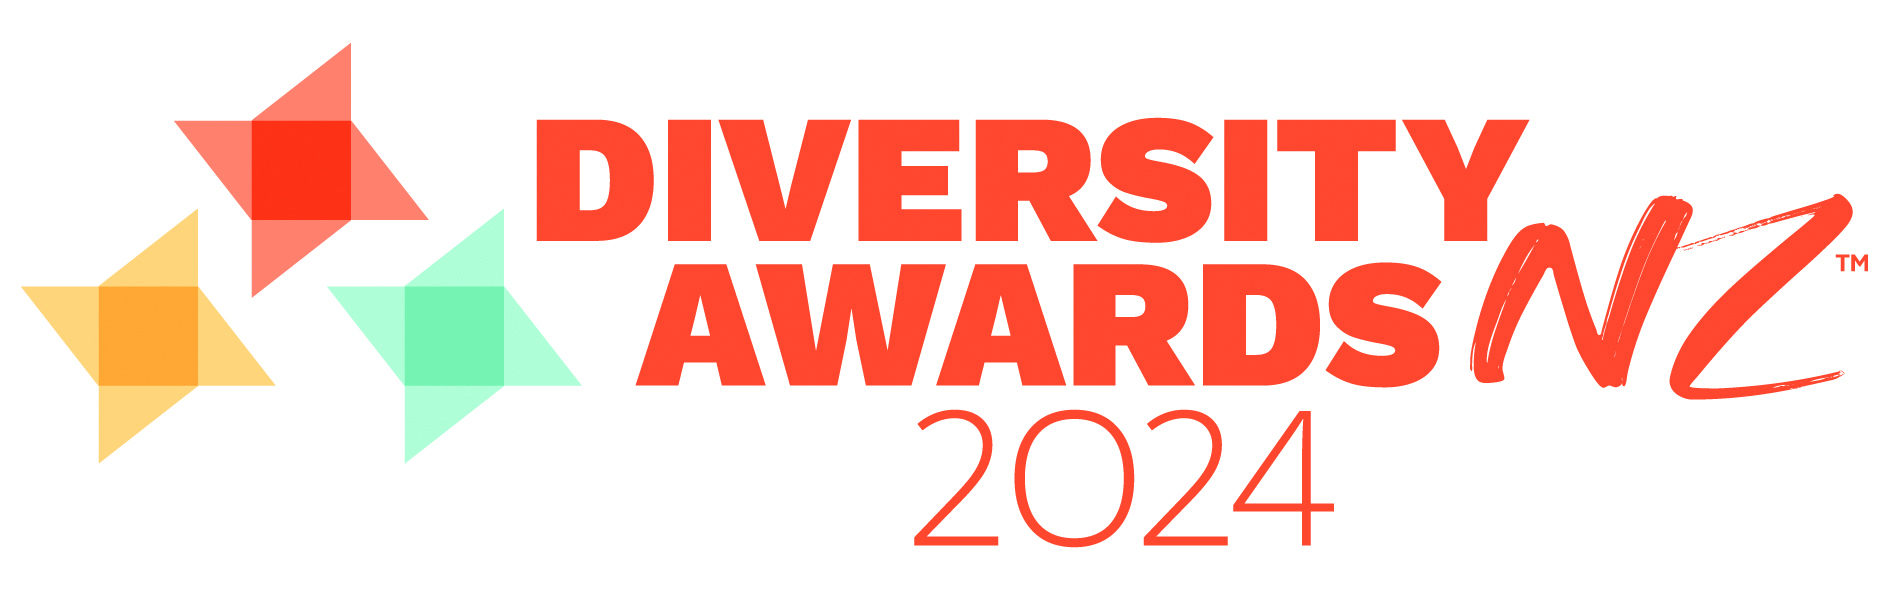 Diversity Awards NZ 2024